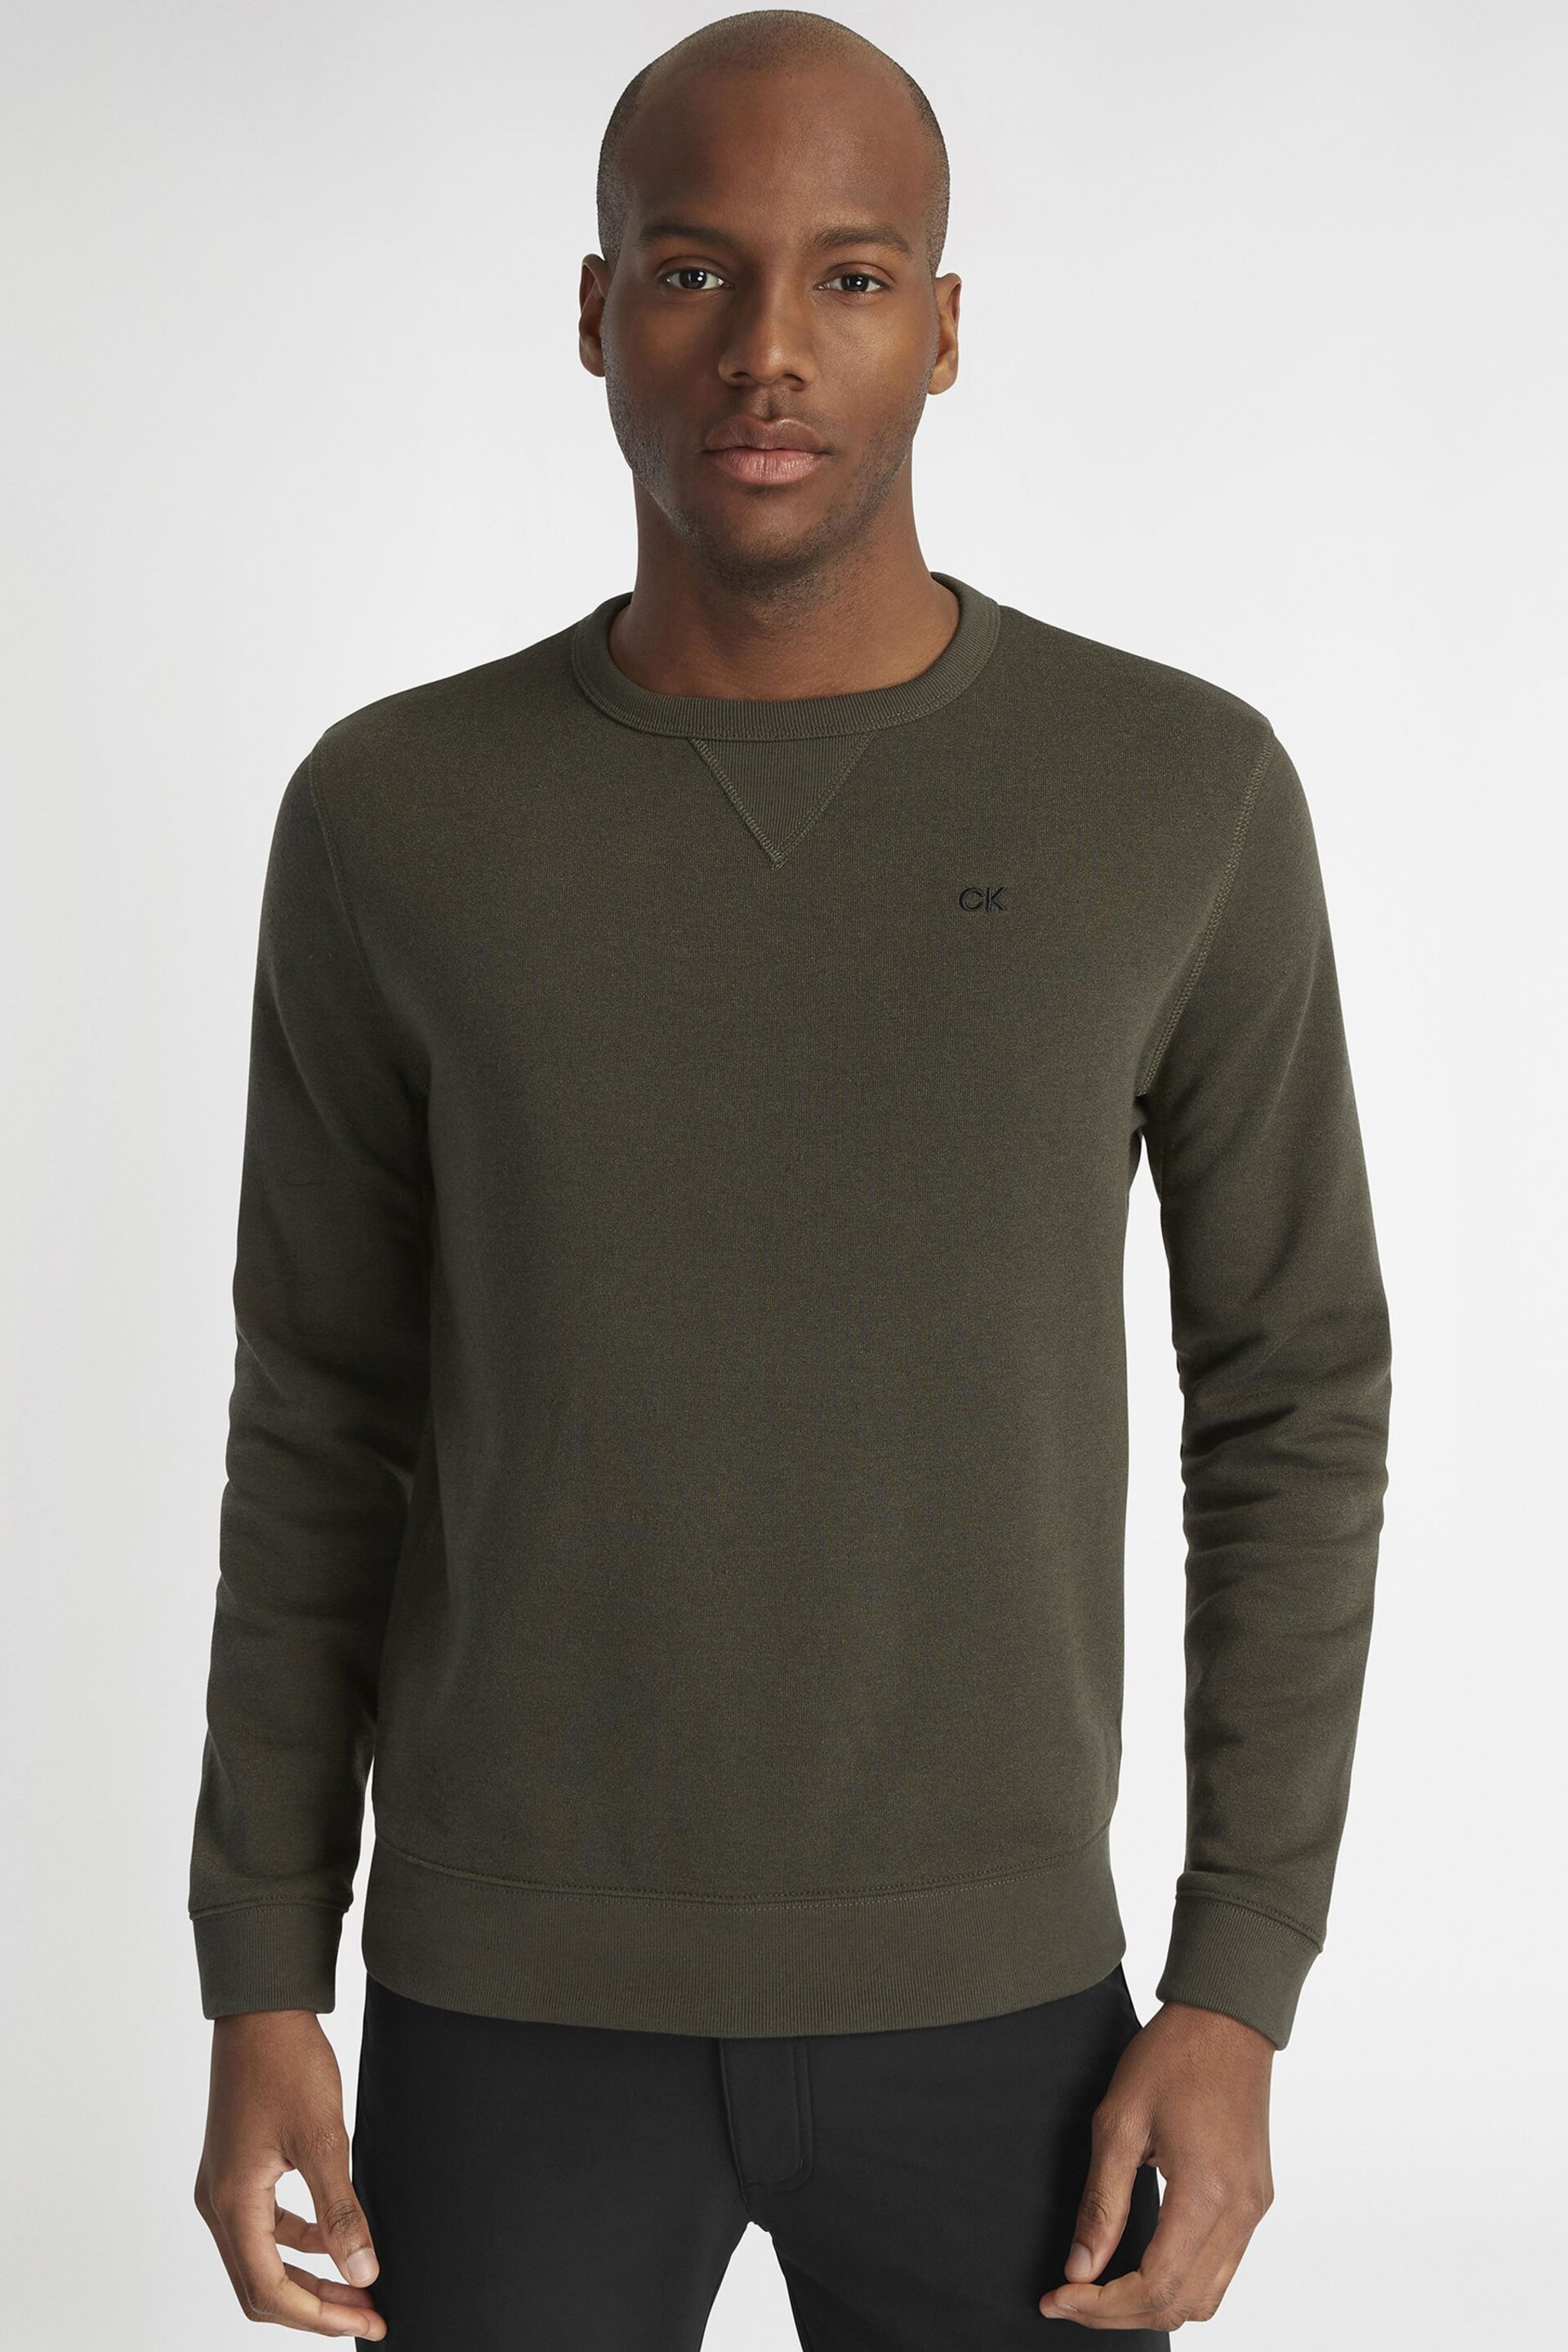 Calvin Klein Golf Green Ohio Sweatshirt - Image 1 of 8